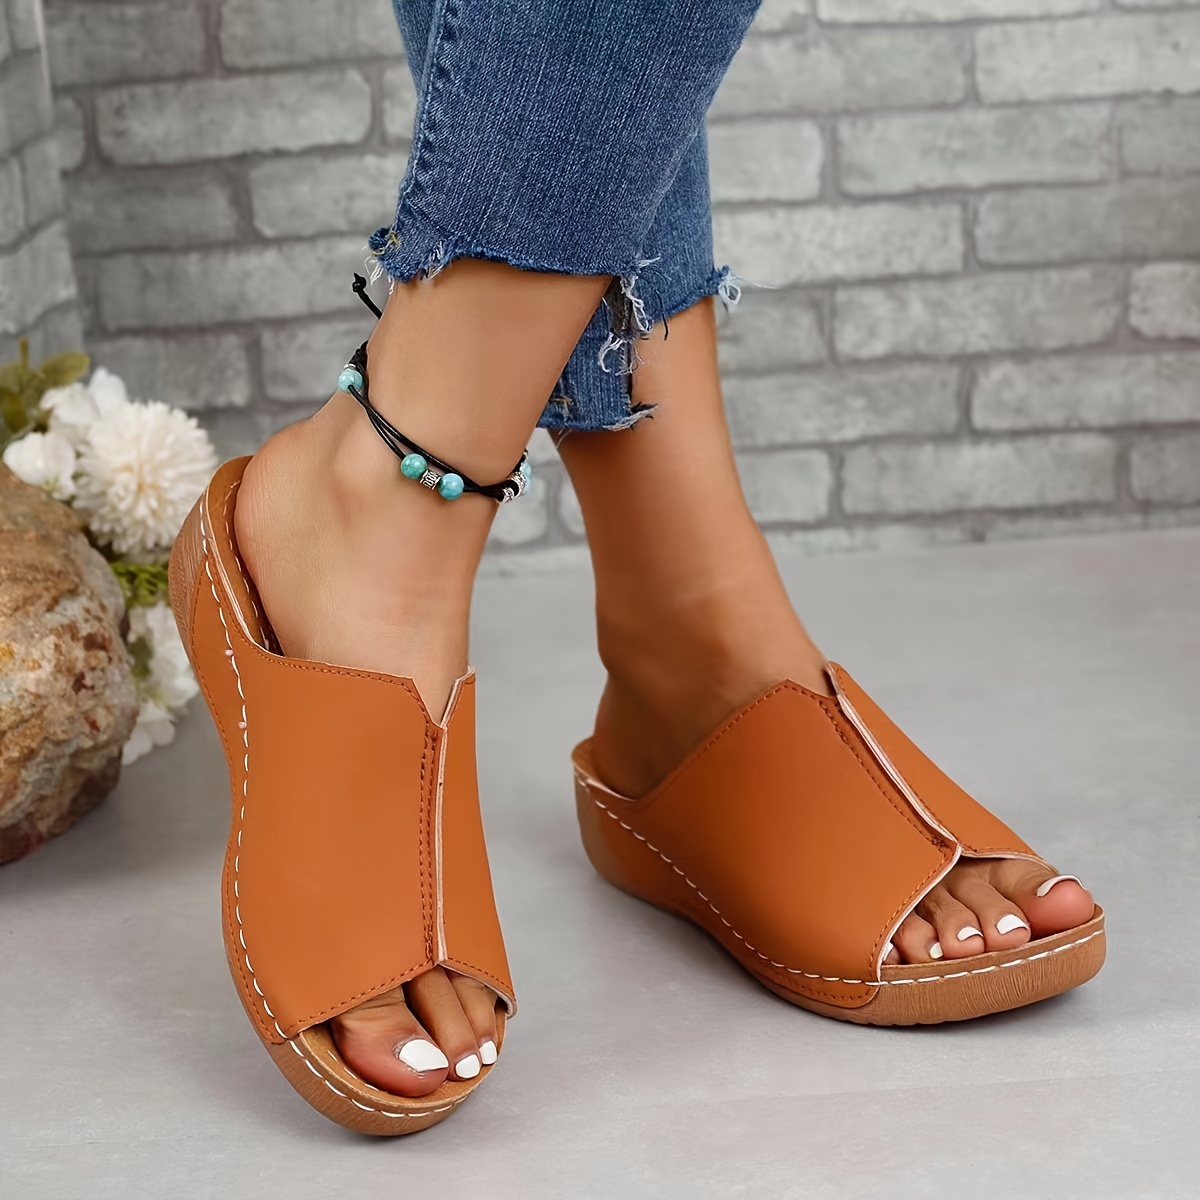 solid color stylish sandals women s platform slip soft sole details 6